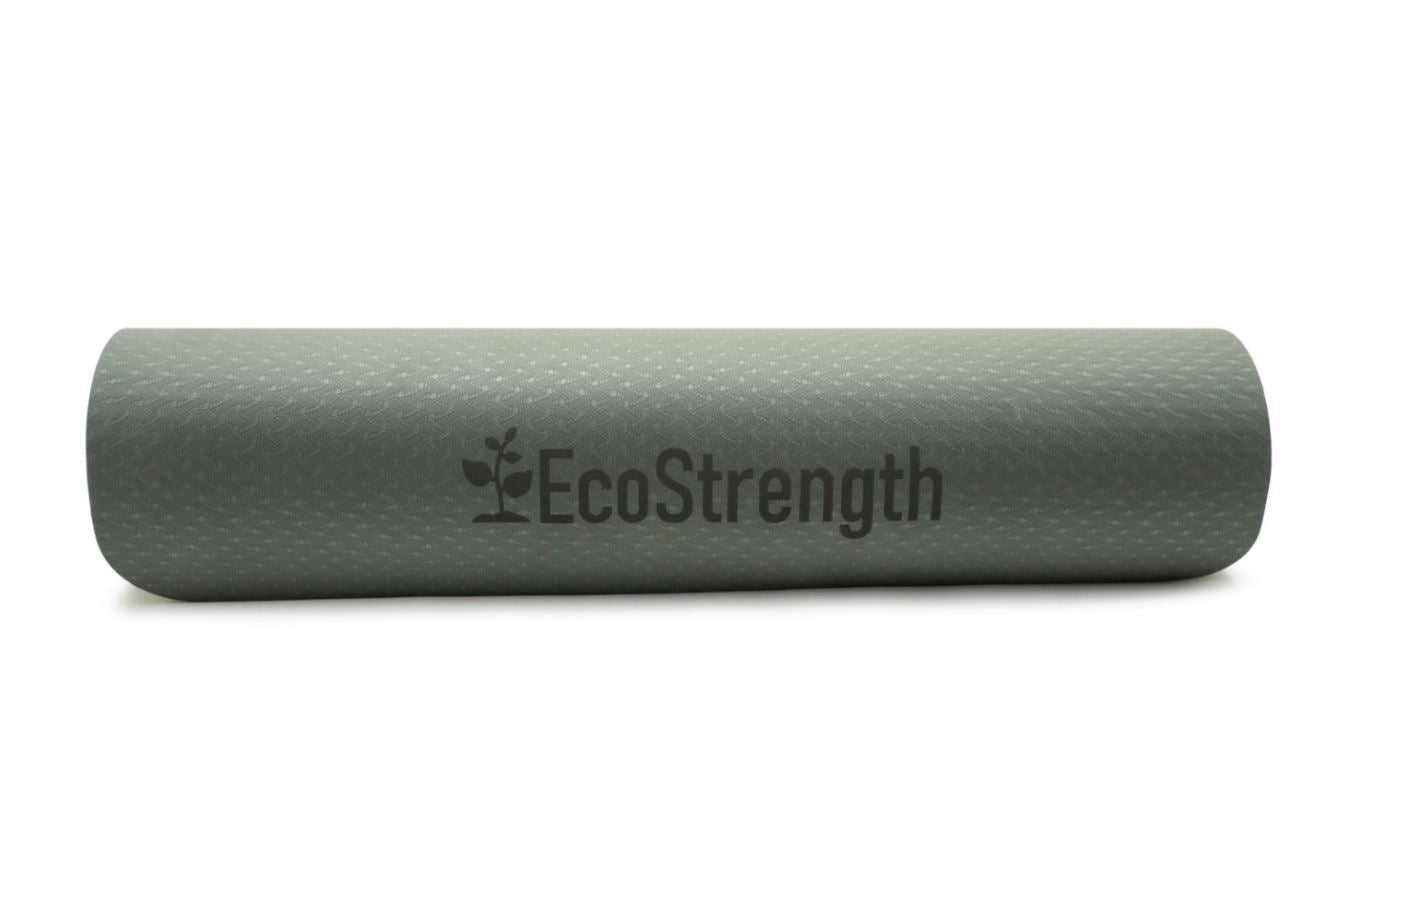 Eco Strength | Green Yoga Mat, Yoga Mat, Eco Strength, Defiance Outdoor Gear Co.